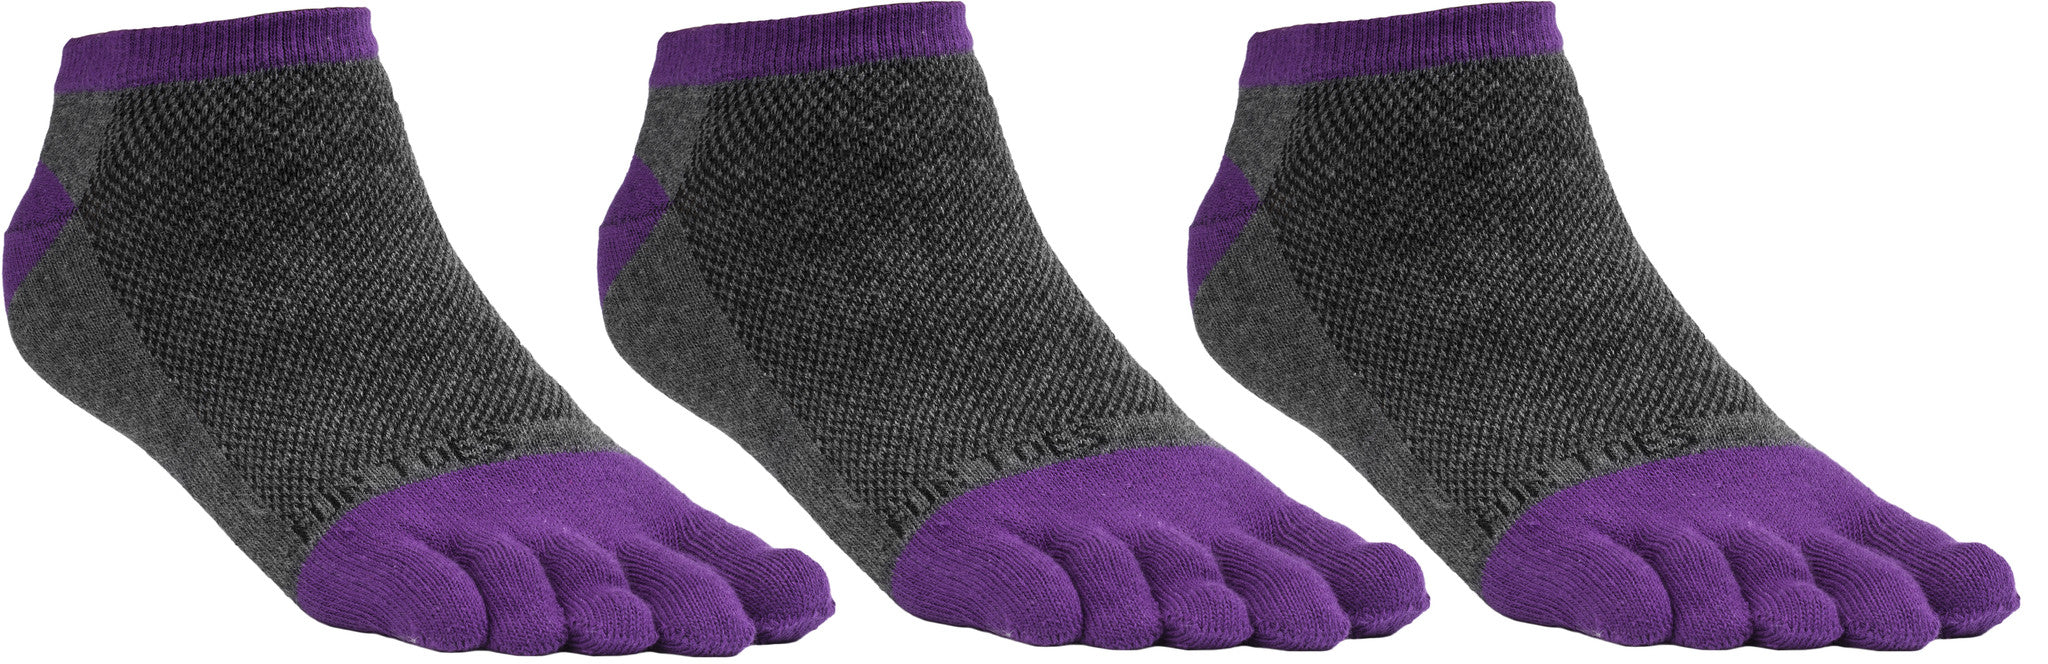 FUN TOES Women's Toe Socks Barefoot Running Socks Size 9-11 Shoe Size 4-10 Pack of 3 Pairs   Grey/Purple